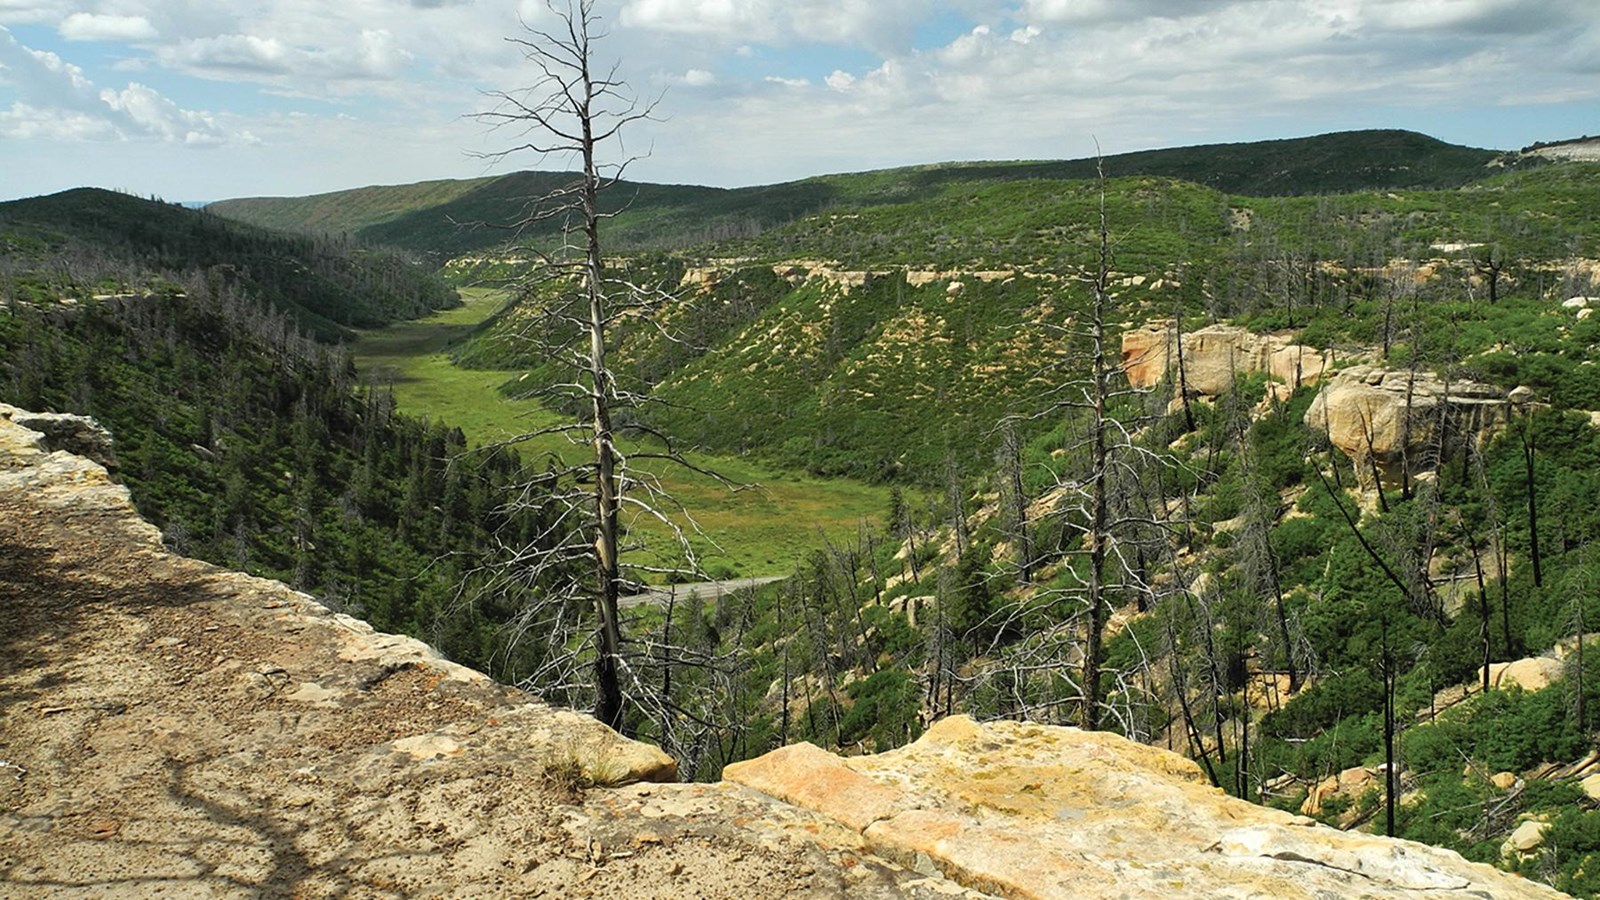 Looking down at a broad view of a green canyon below a ridge.